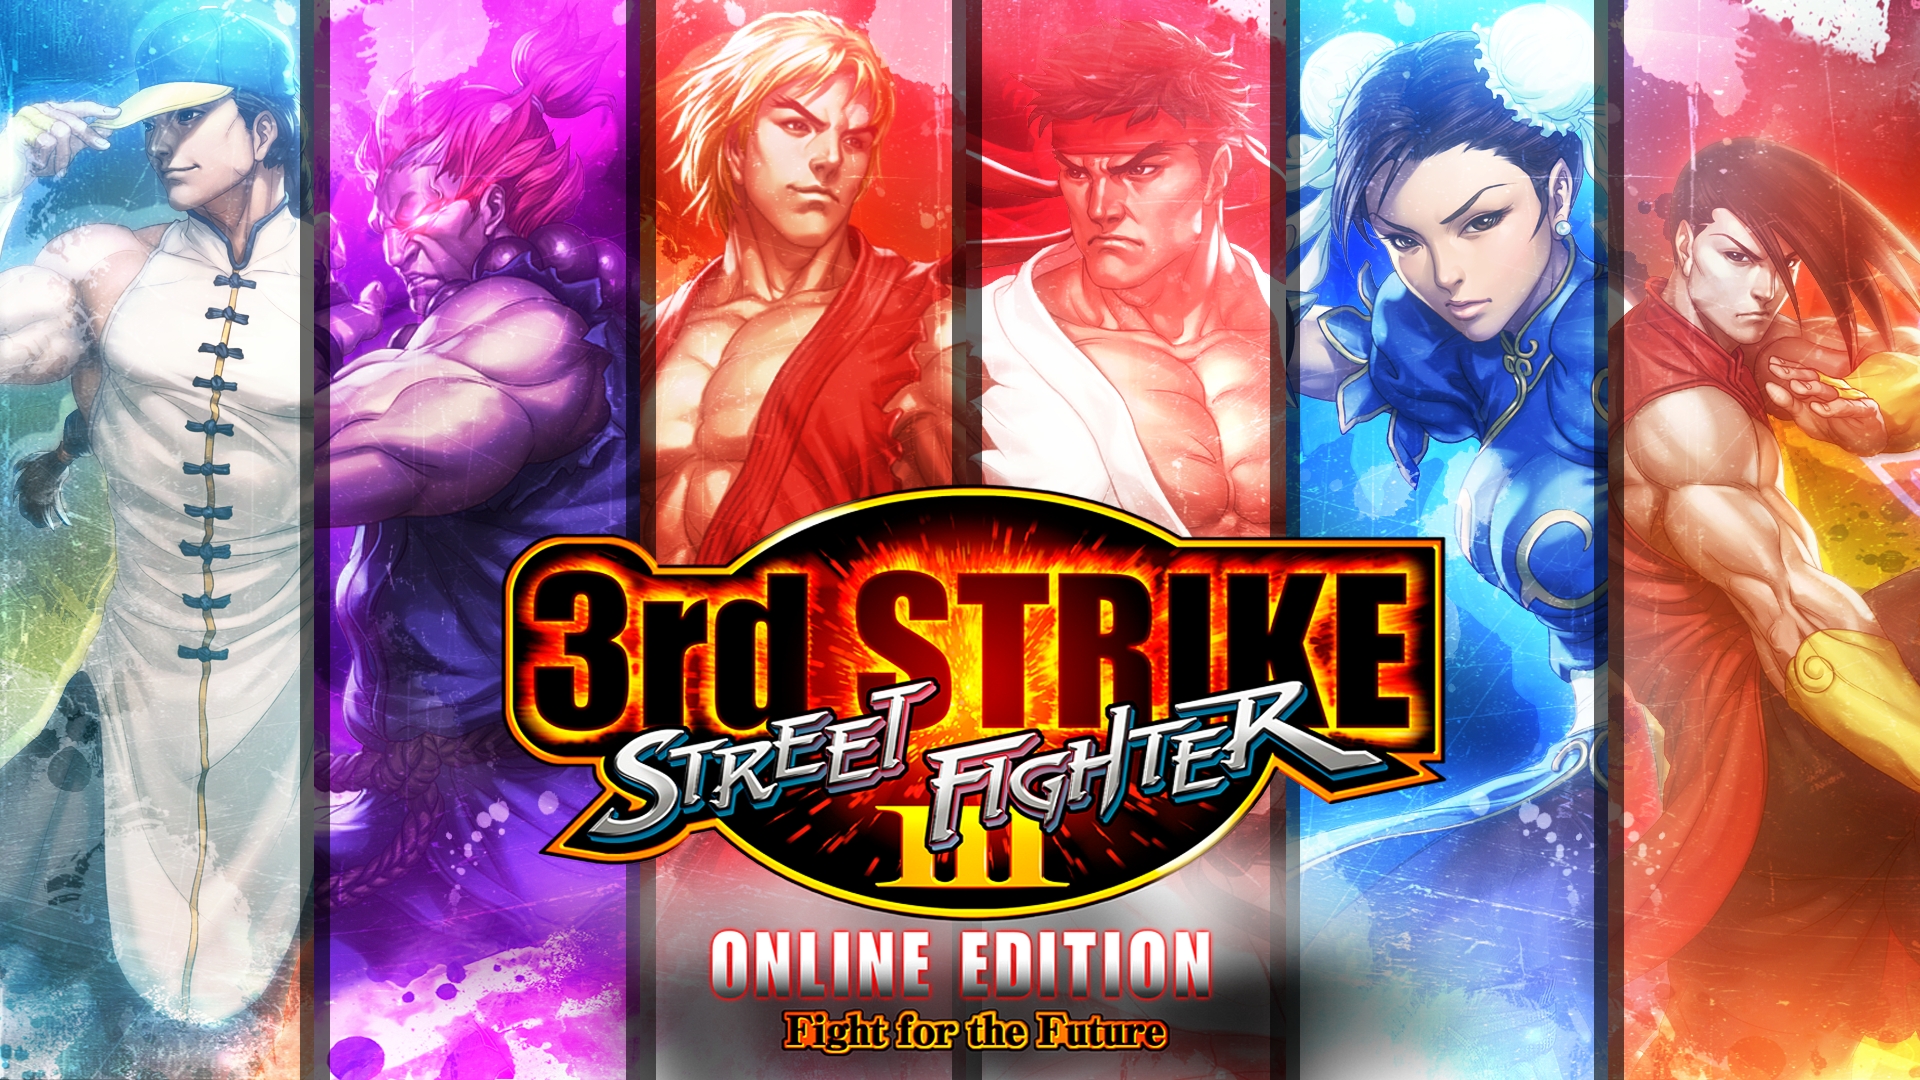 Street Fighter III 3rd Strike Online Edition Desktop and mobile